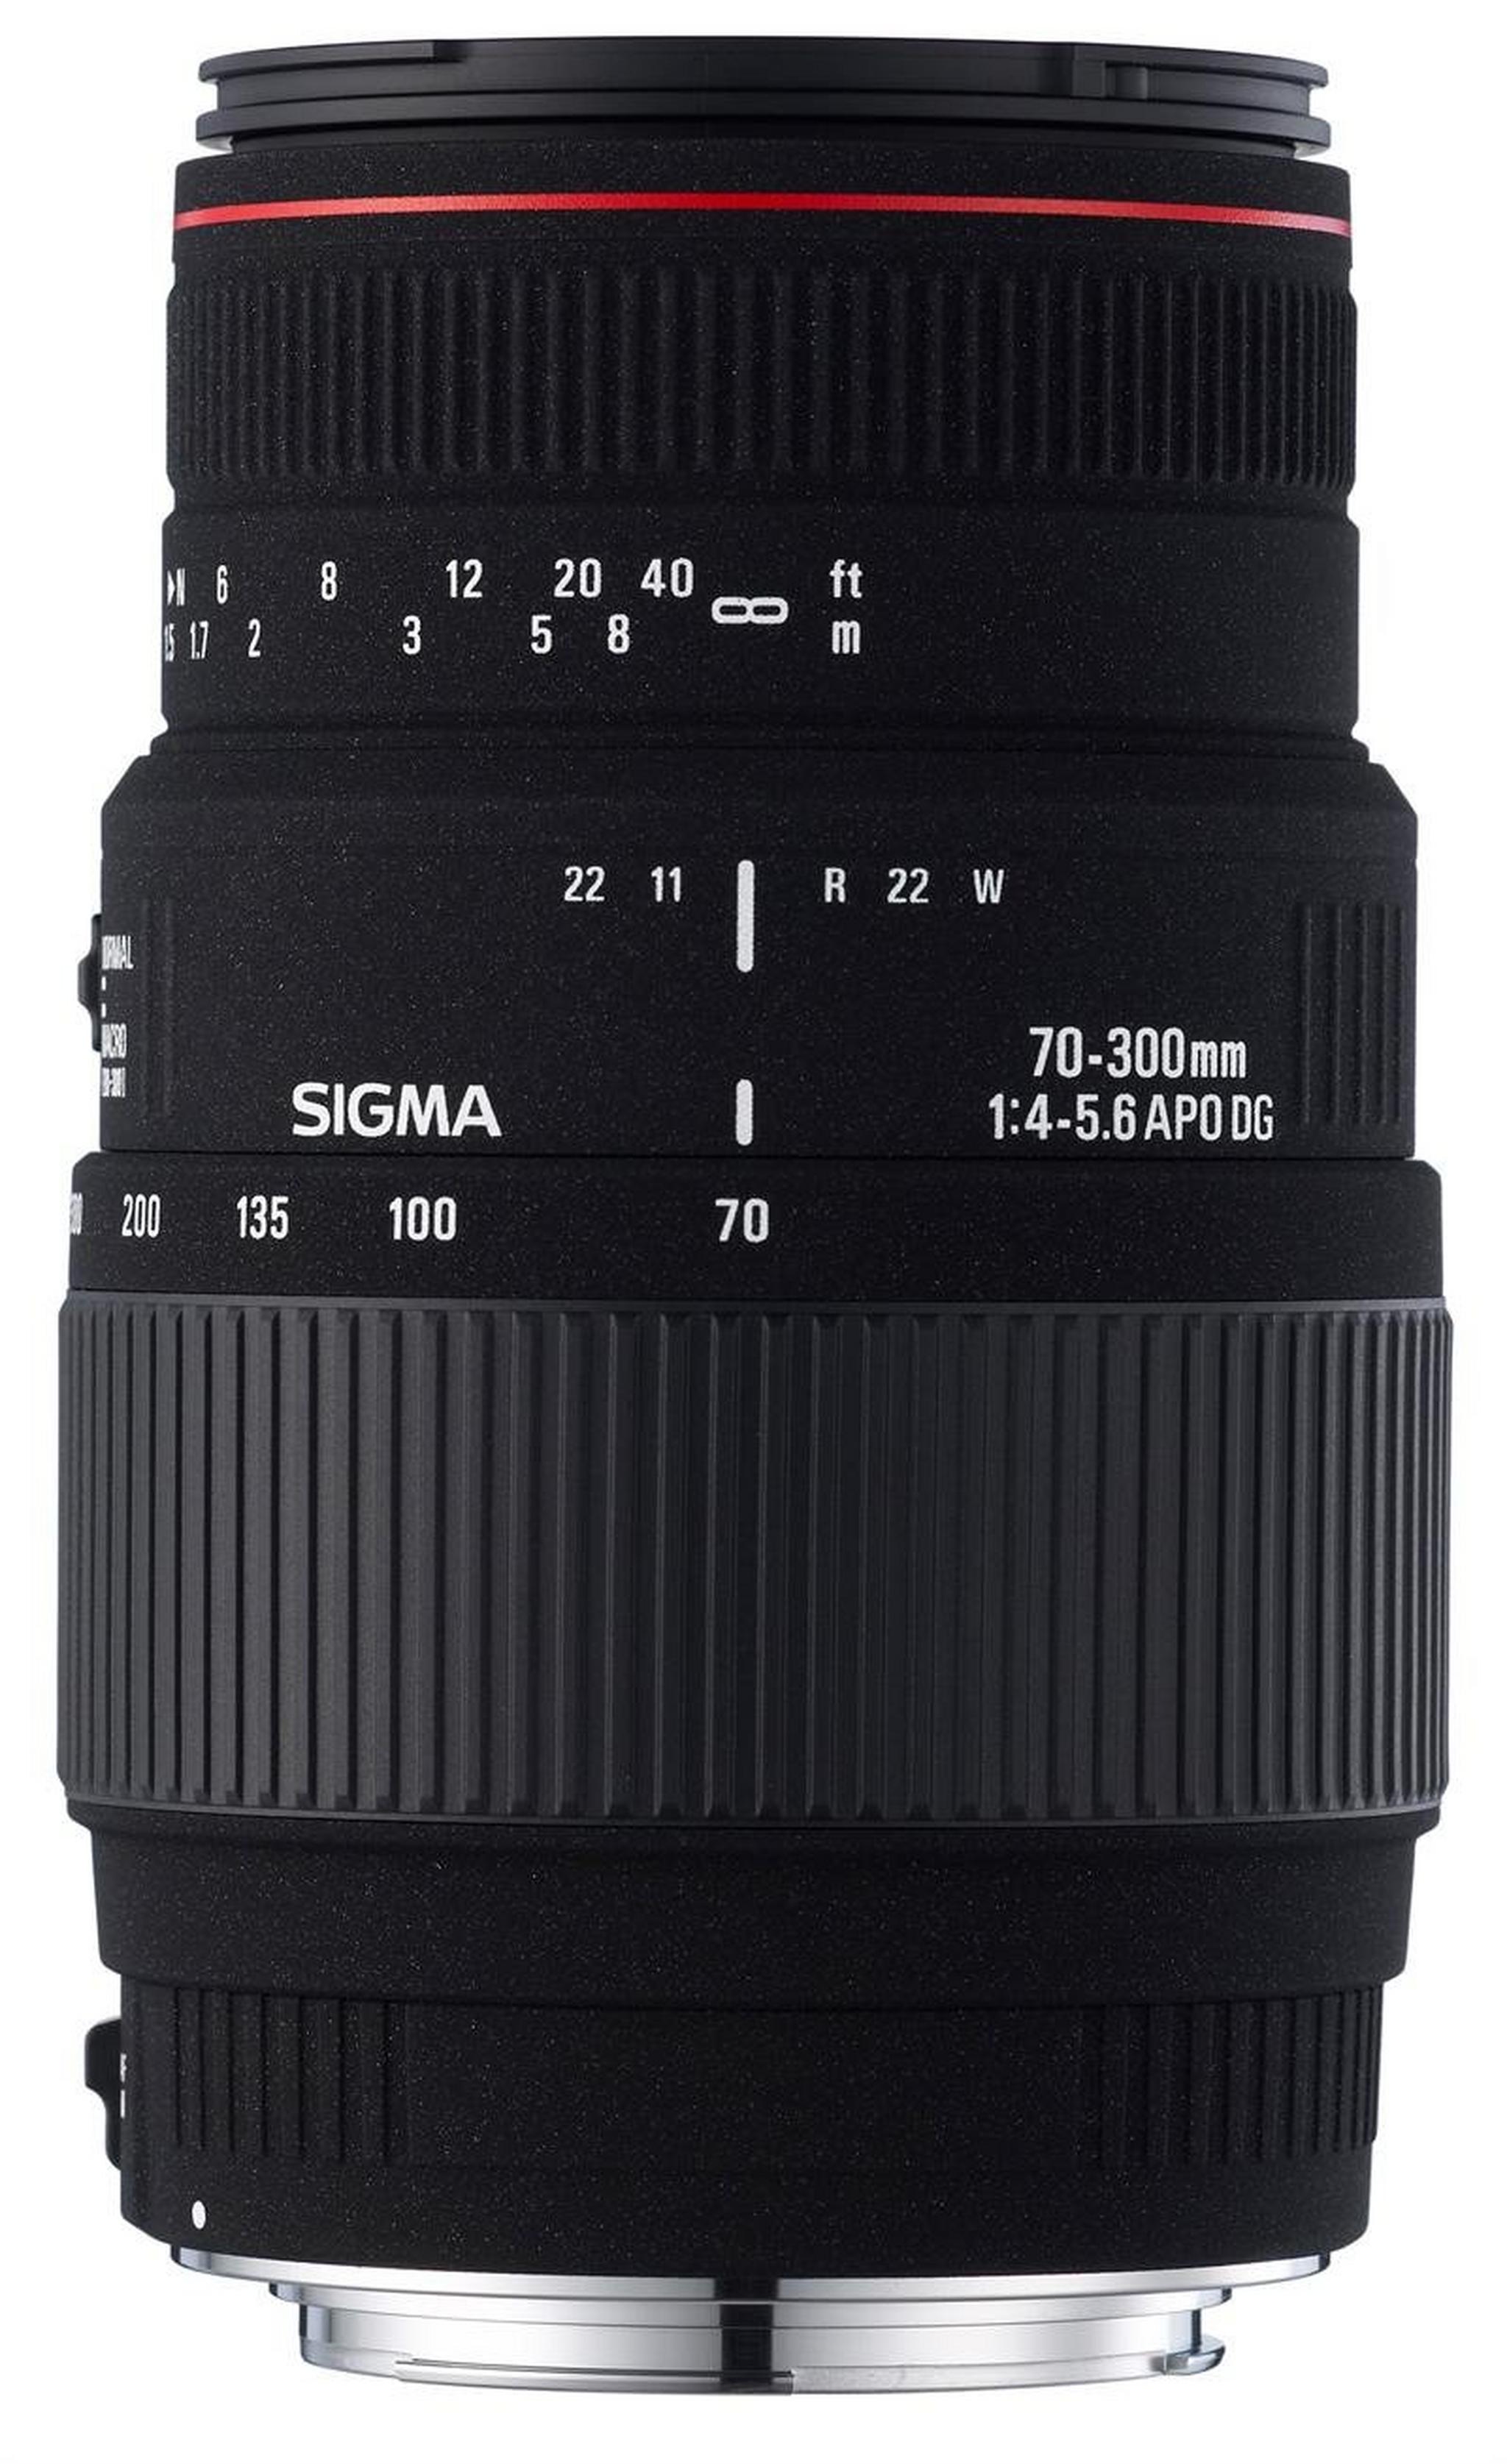 Sigma 70-300mm F4-5.6 APO DG Macro - Canon Mount